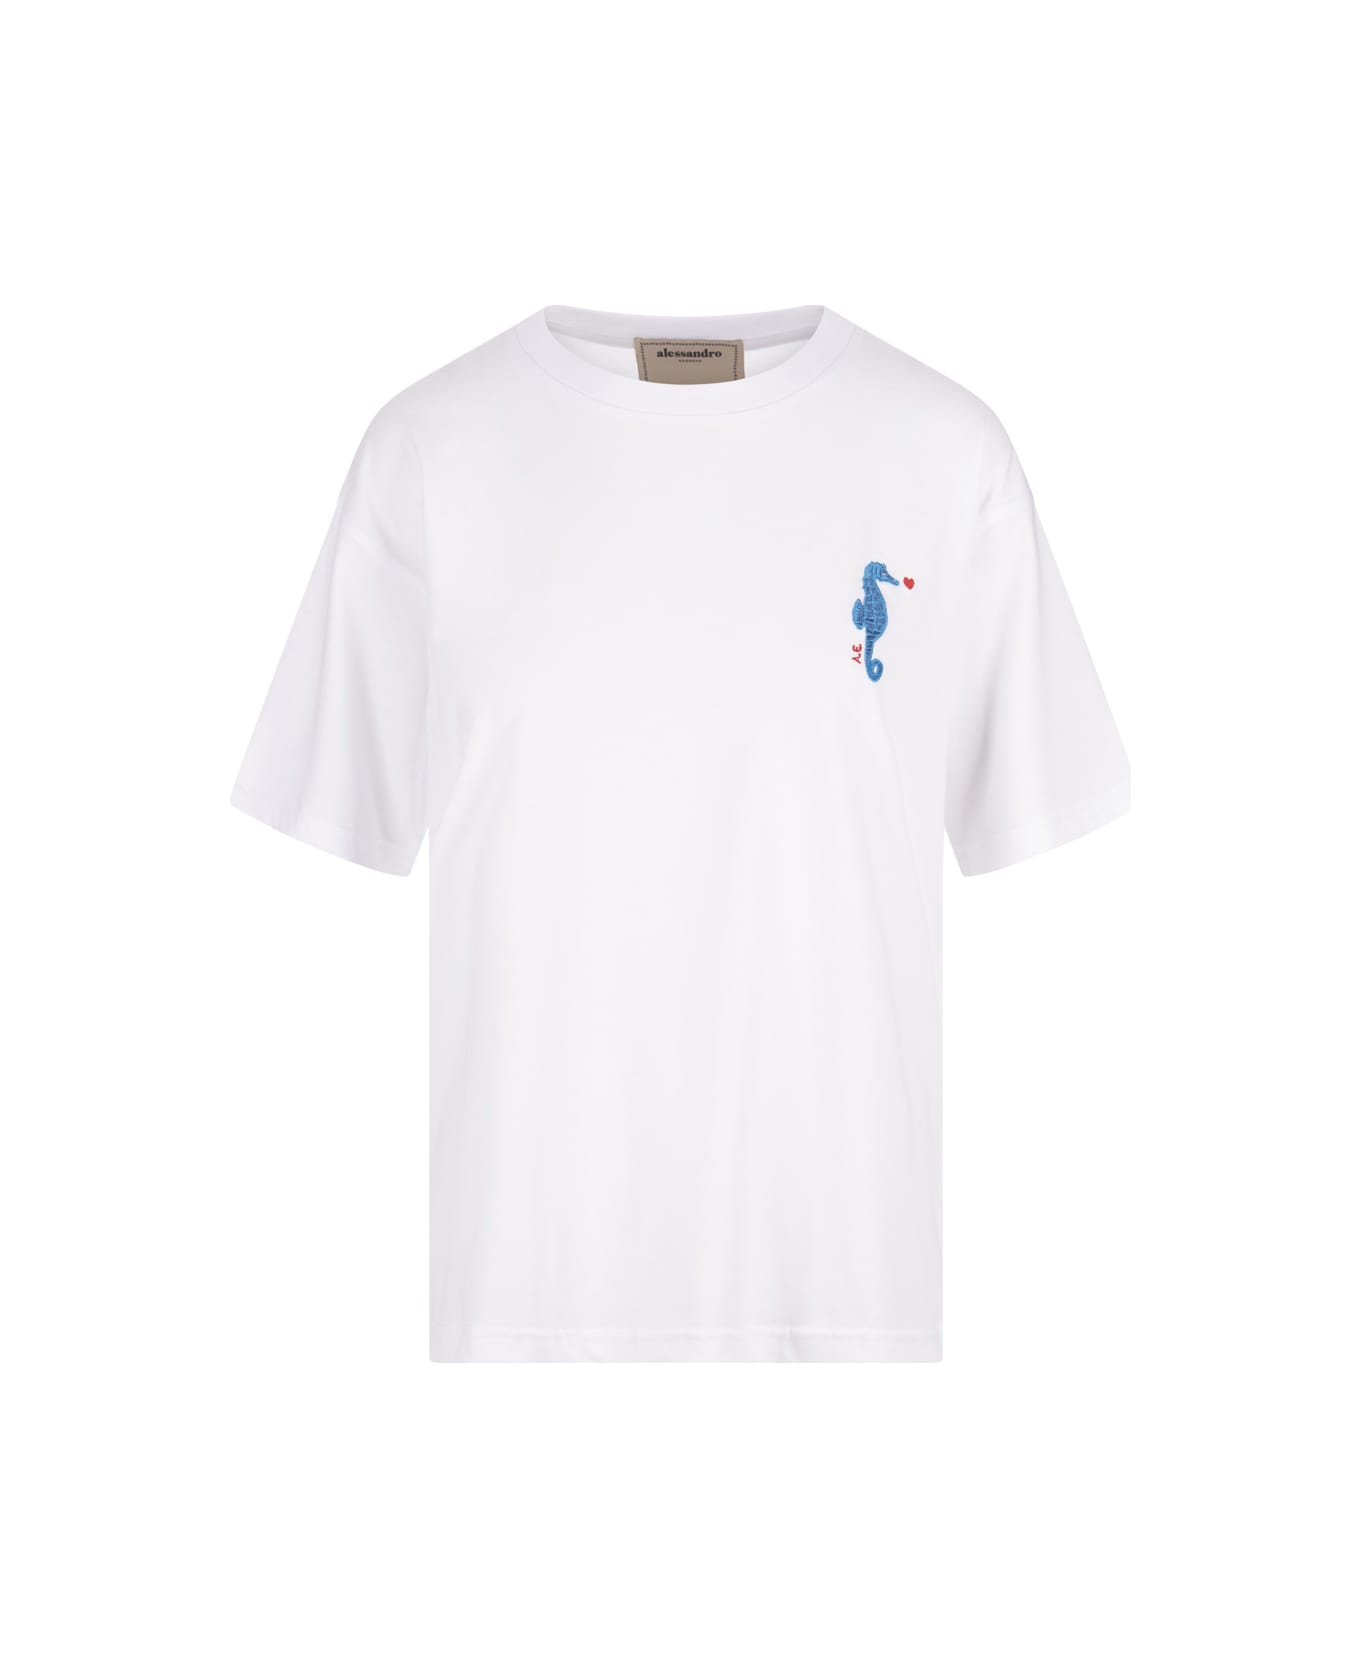 Alessandro Enriquez White T-shirt With Seahorse Embroidery - White